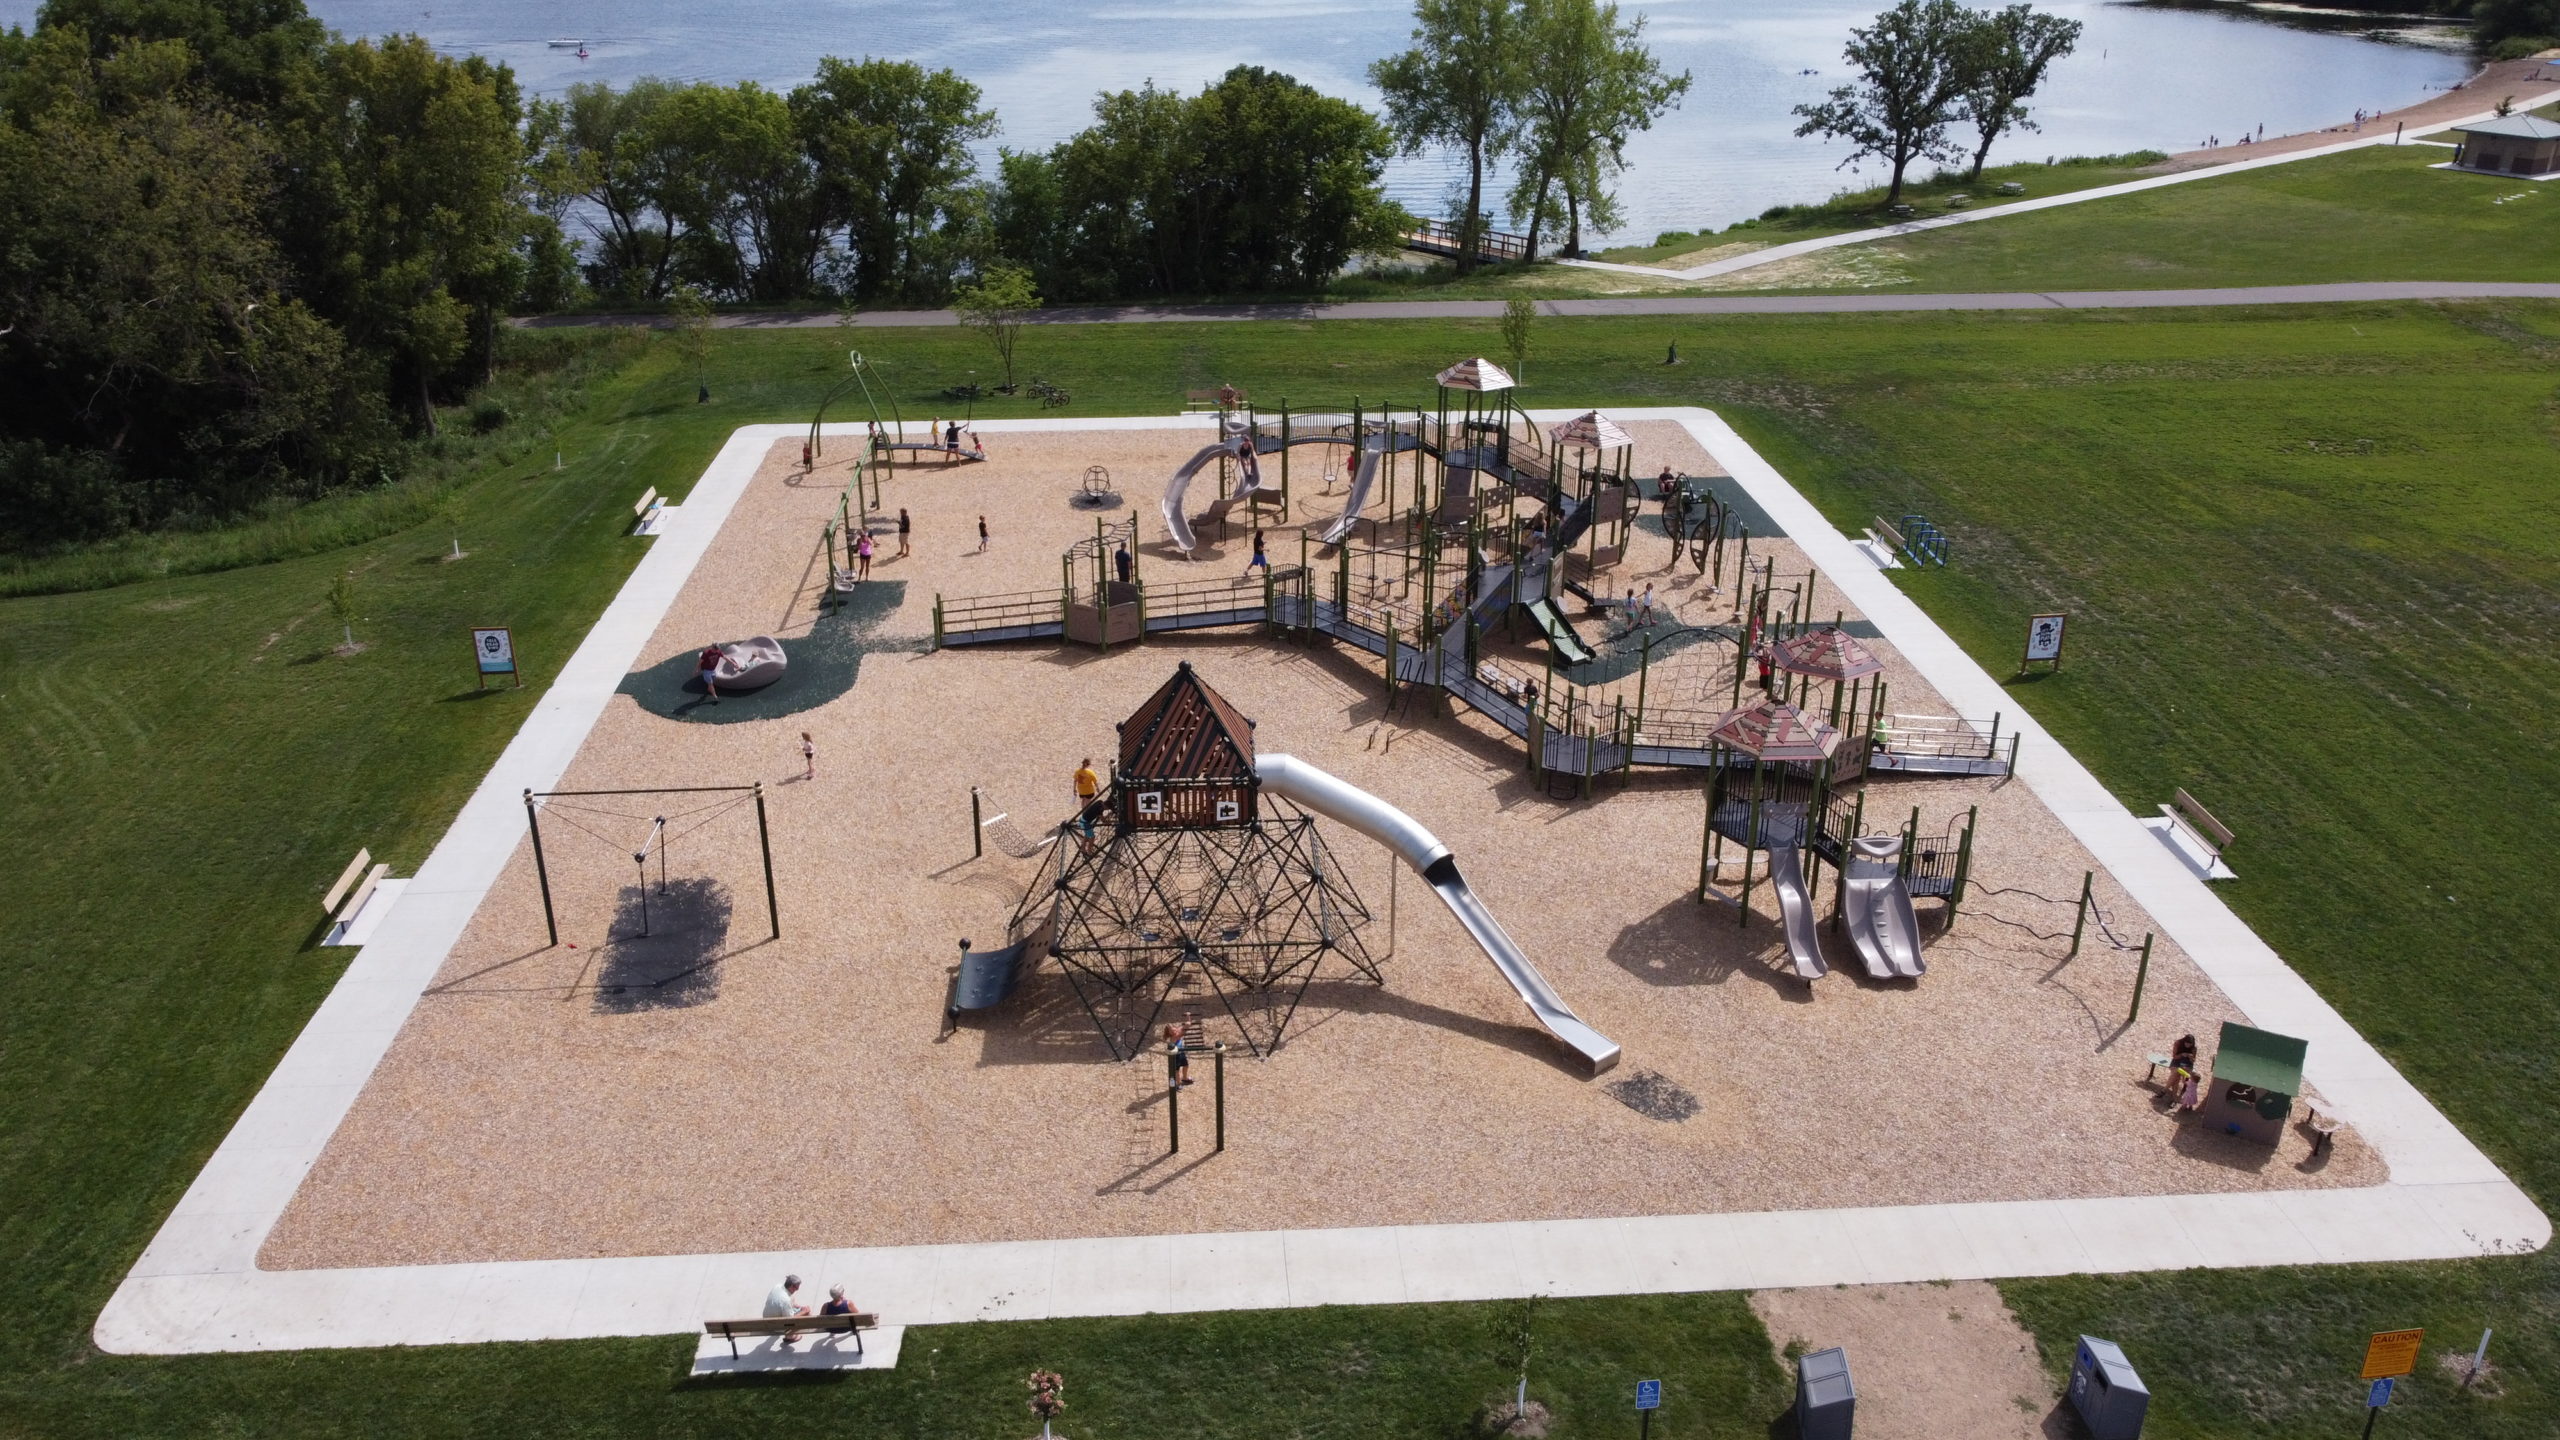 Minnesota Destination Playground at Lake Brophy Park in Alexandria, MN